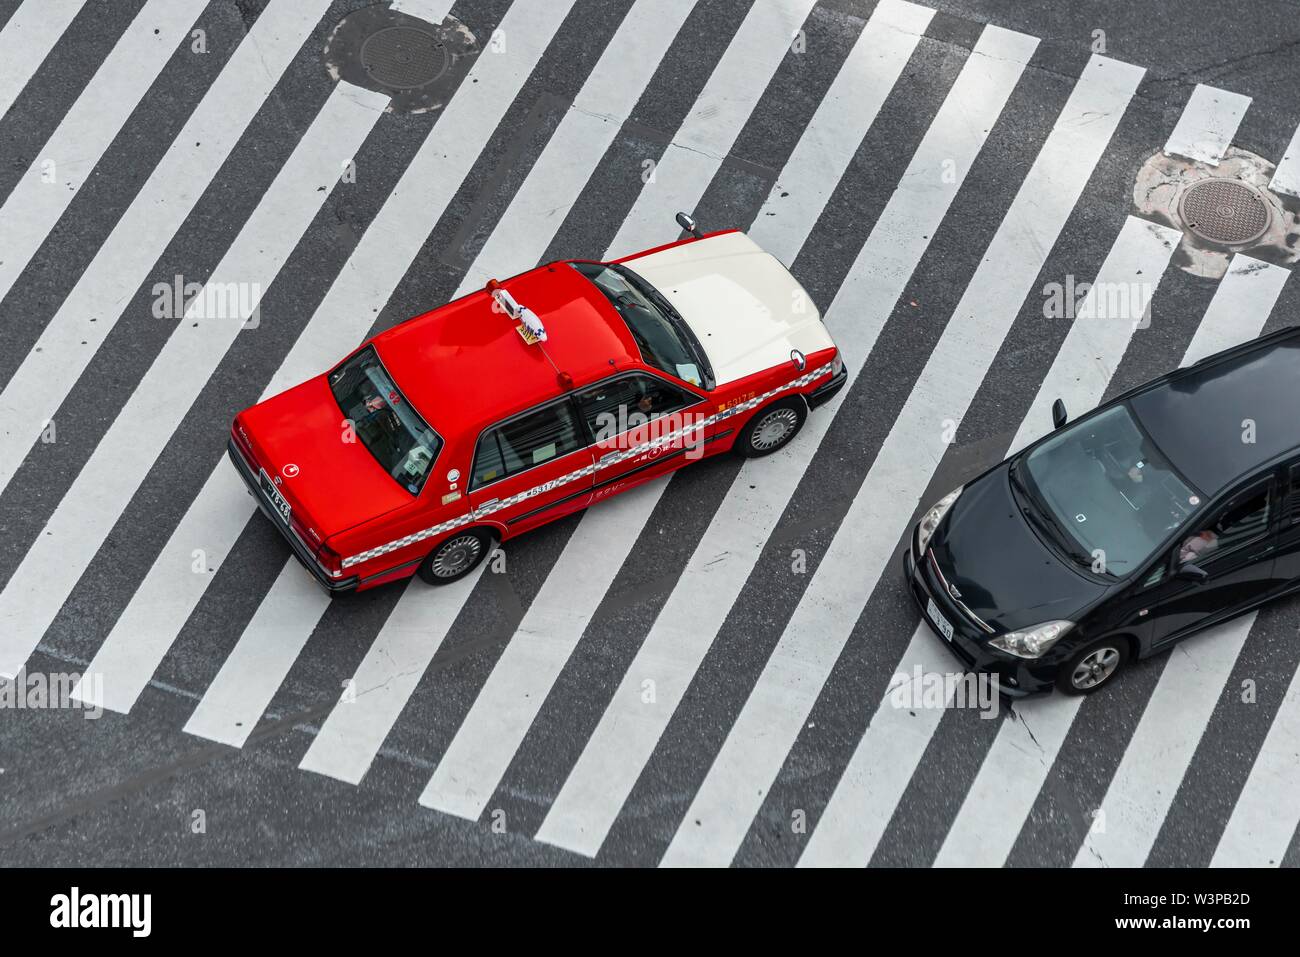 Shibuya Crossing, vetture guida su intersezione, zebra crossing, Shibuya, Udagawacho, Tokyo, Giappone Foto Stock